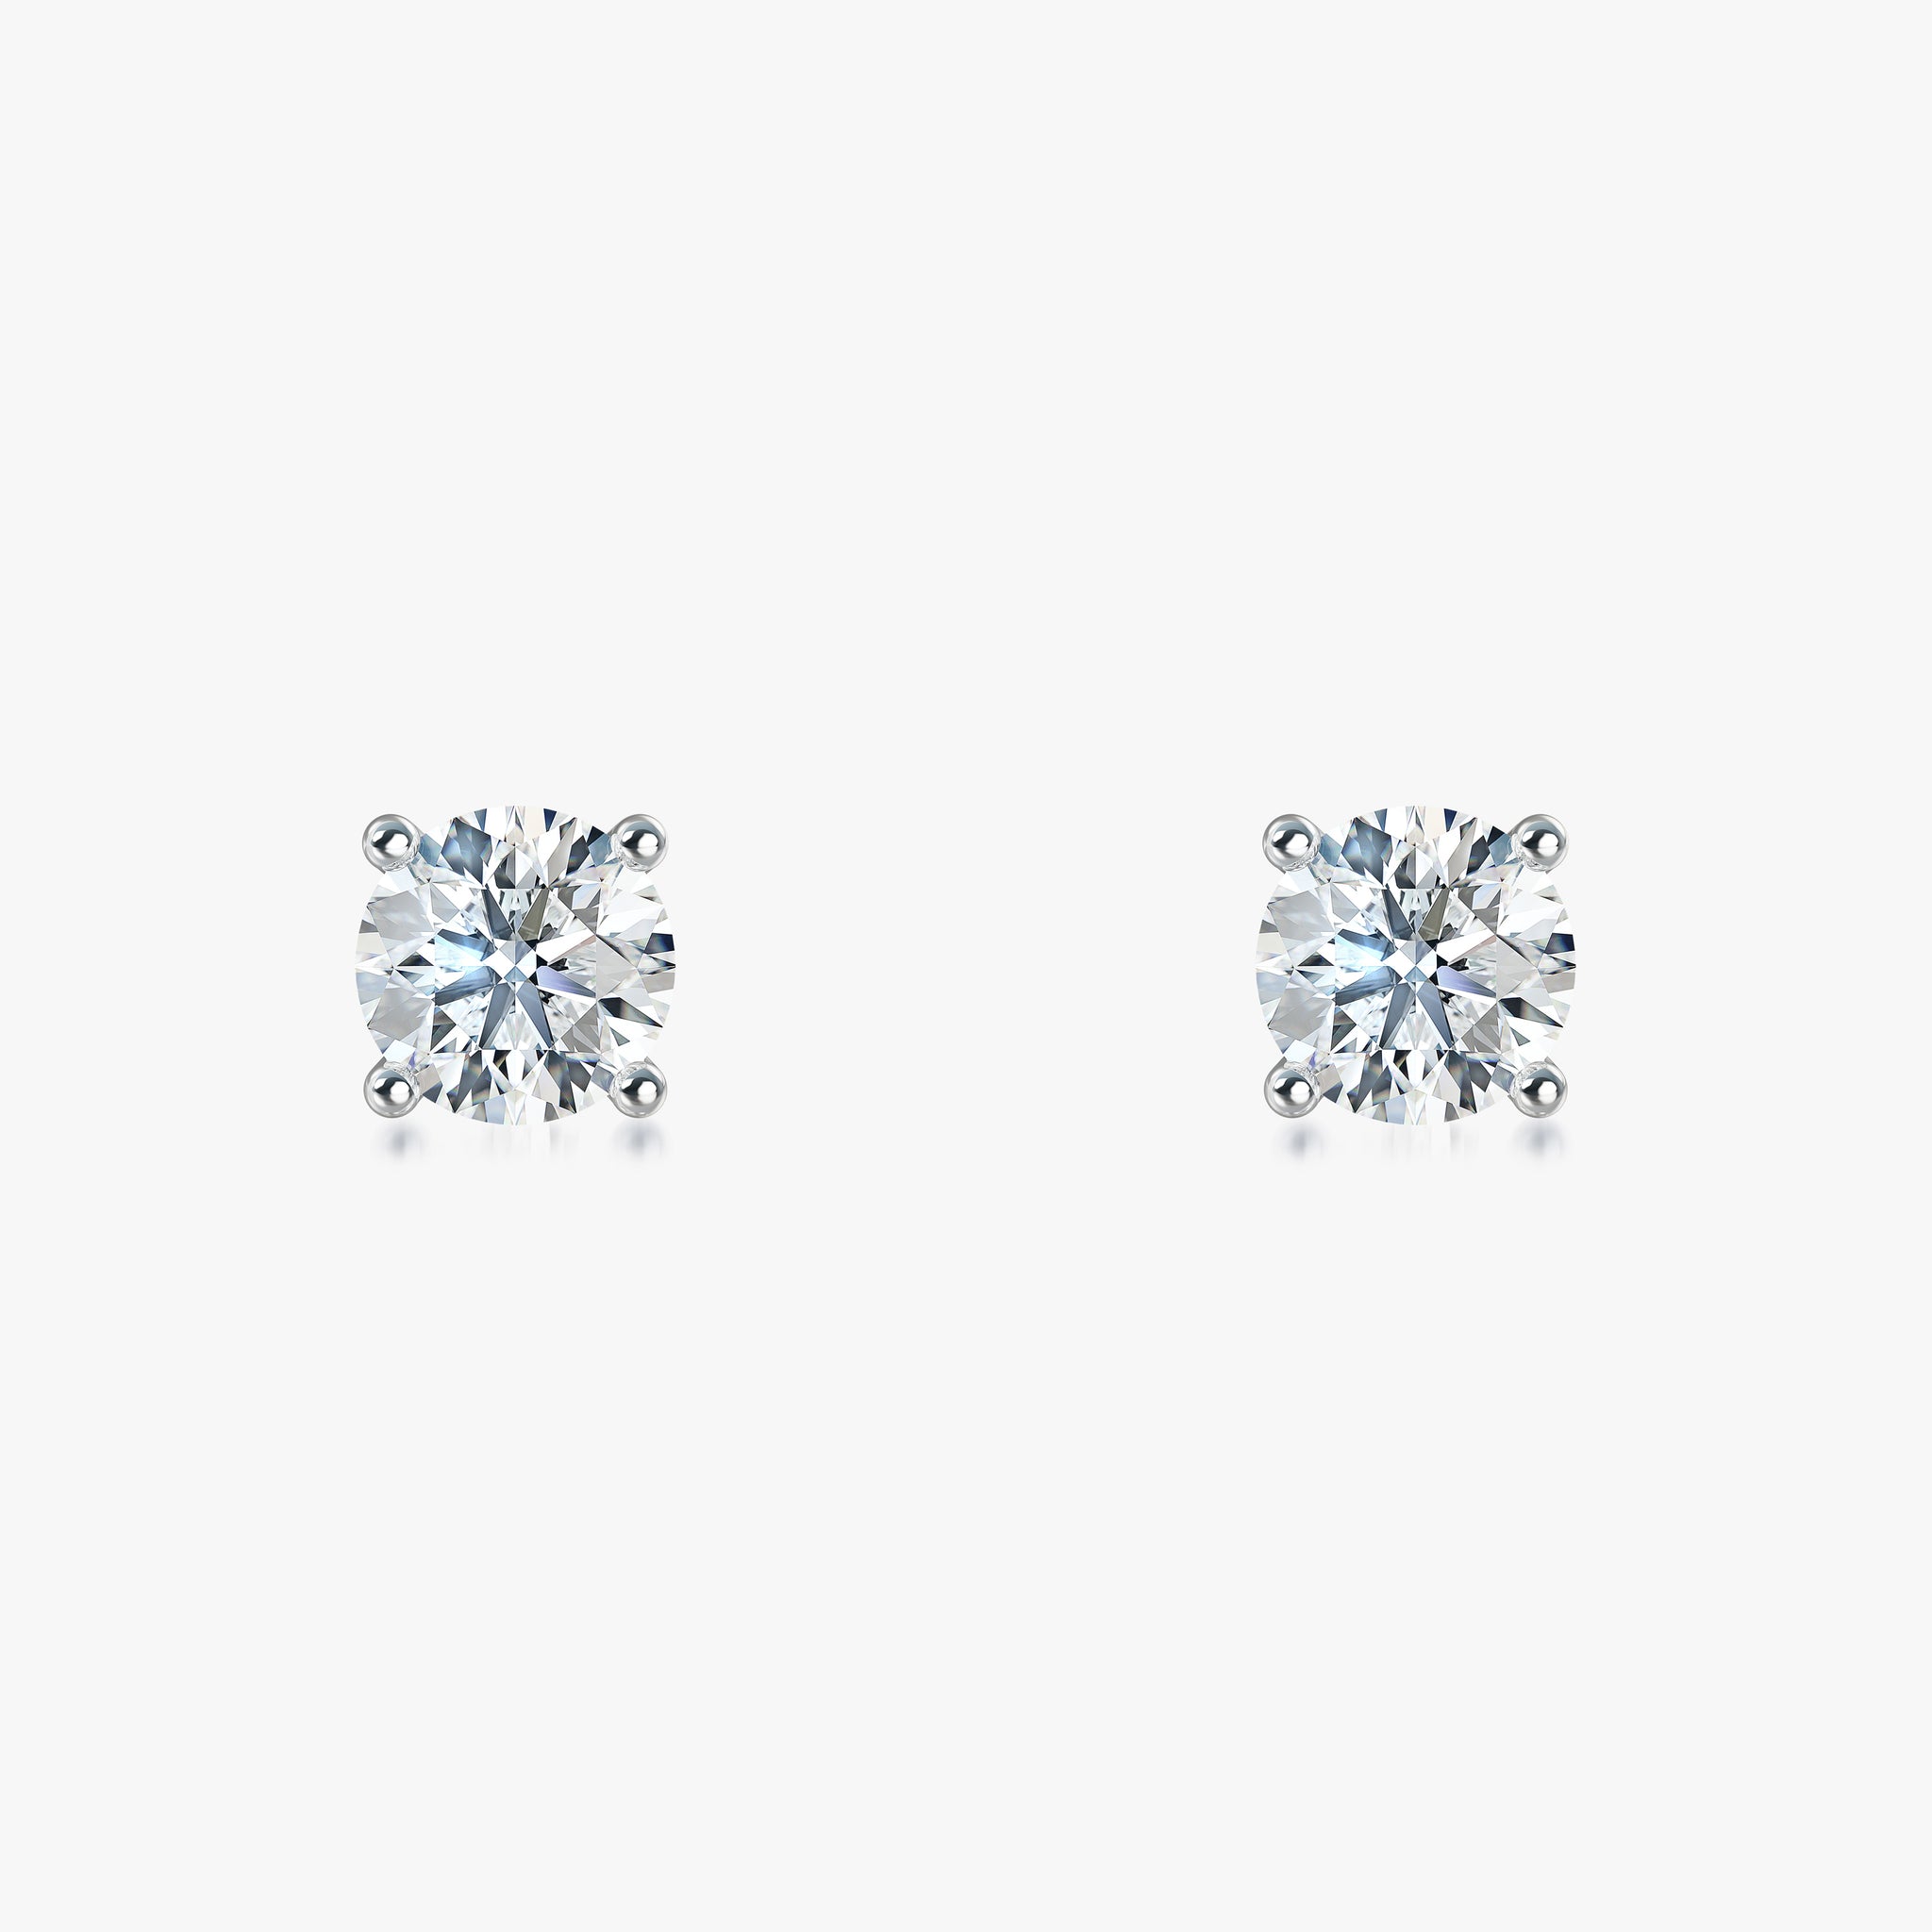 J'EVAR 14KT White Gold ALTR Lab Grown Diamond Stud Earrings Front View